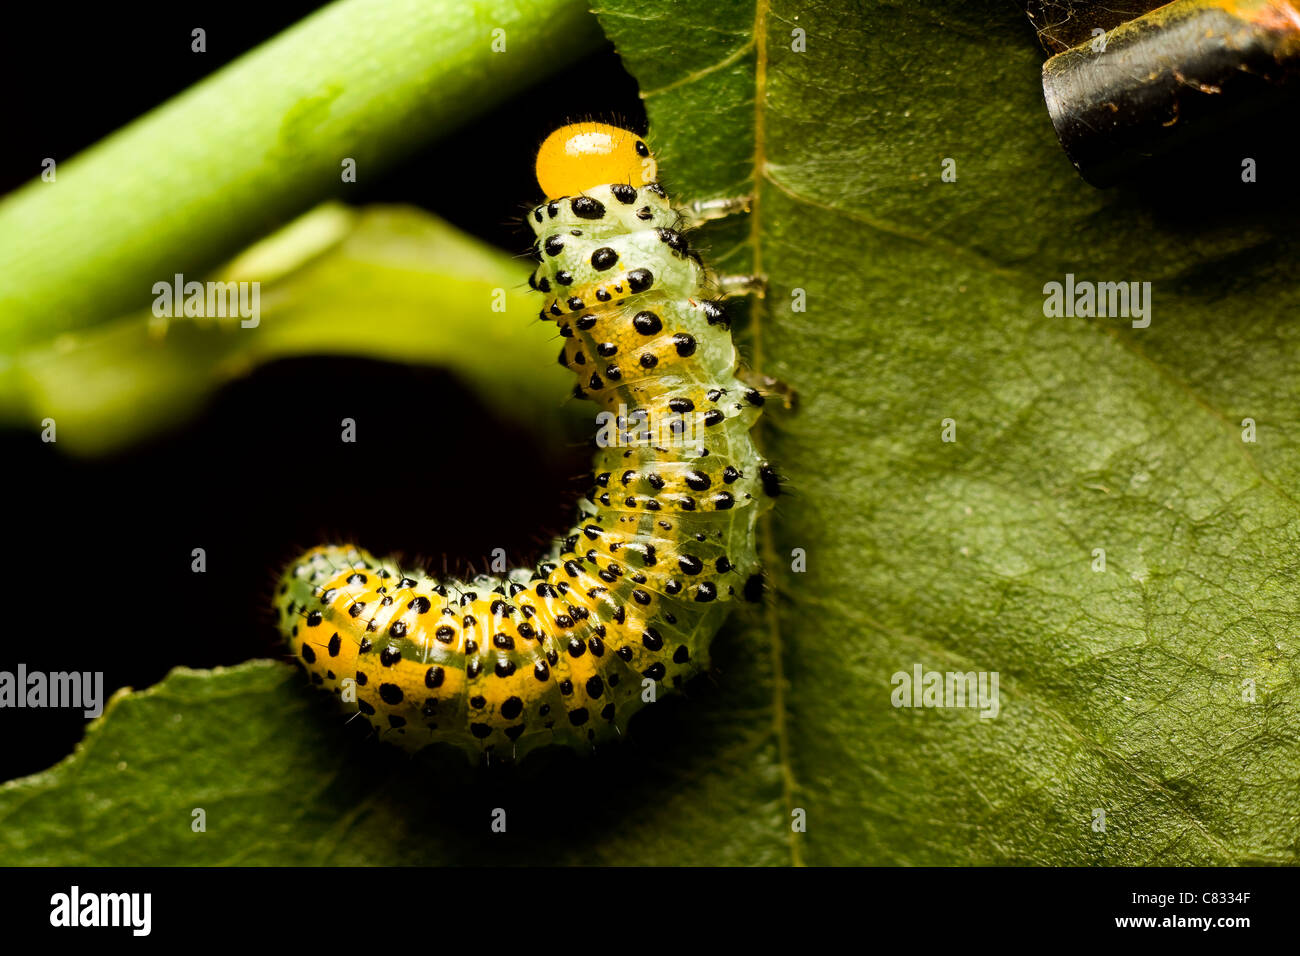 Caterpillar eating rose leaves Stock Photo - Alamy